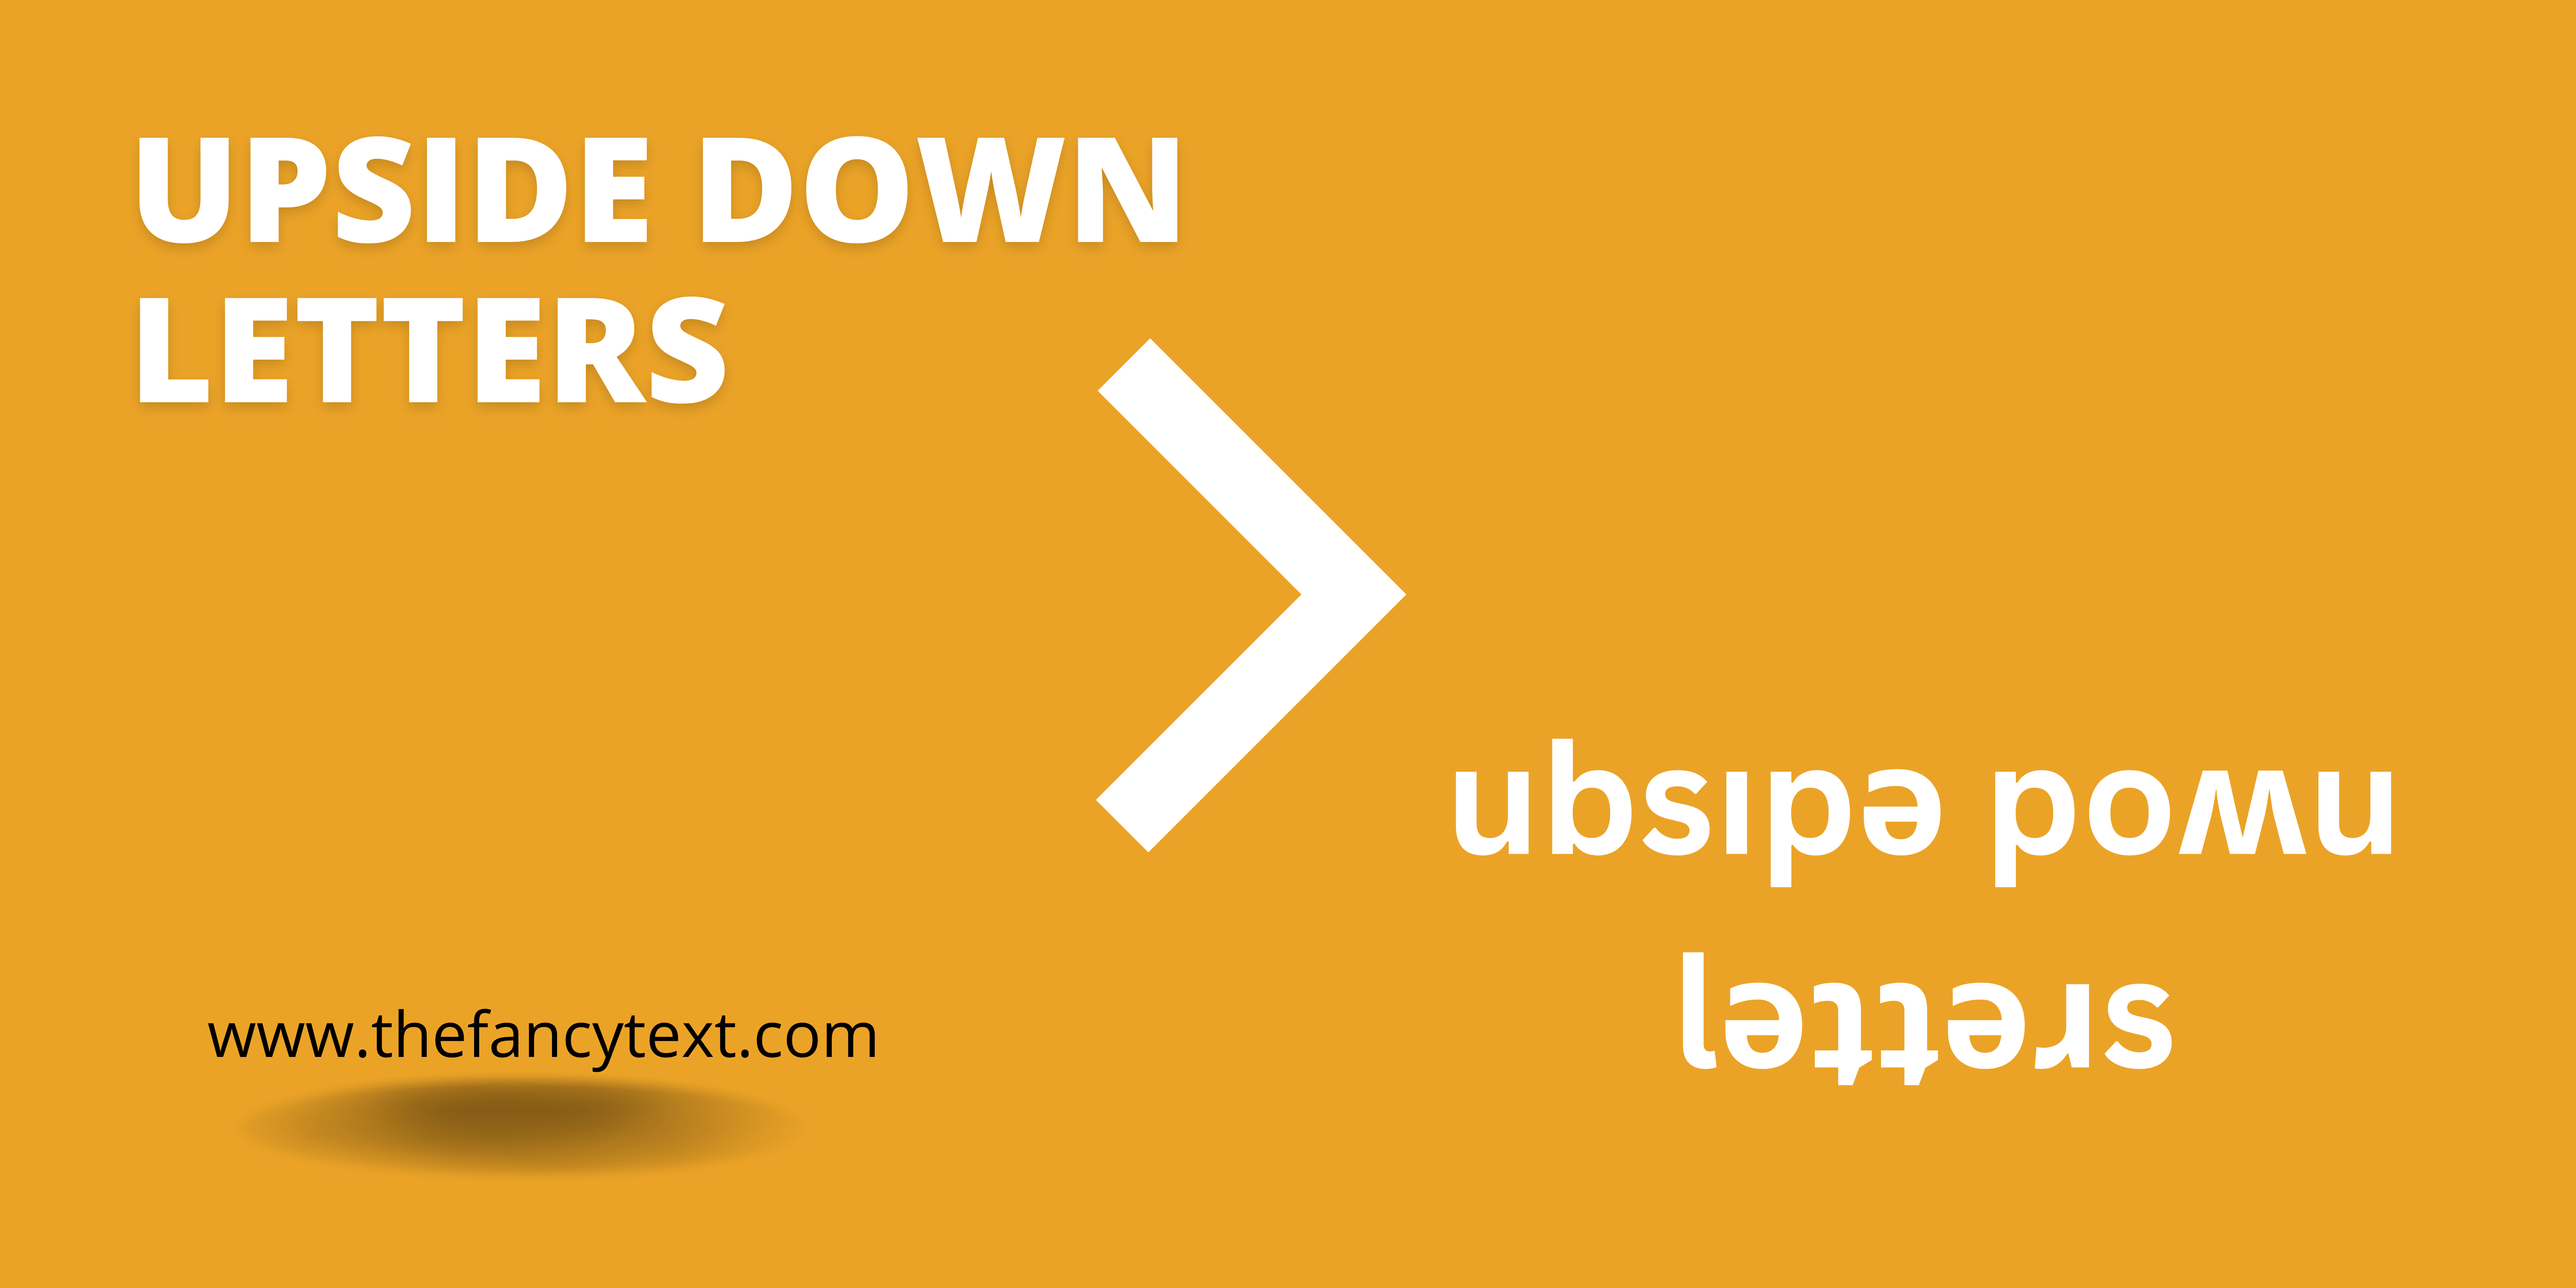 Upside Down letters